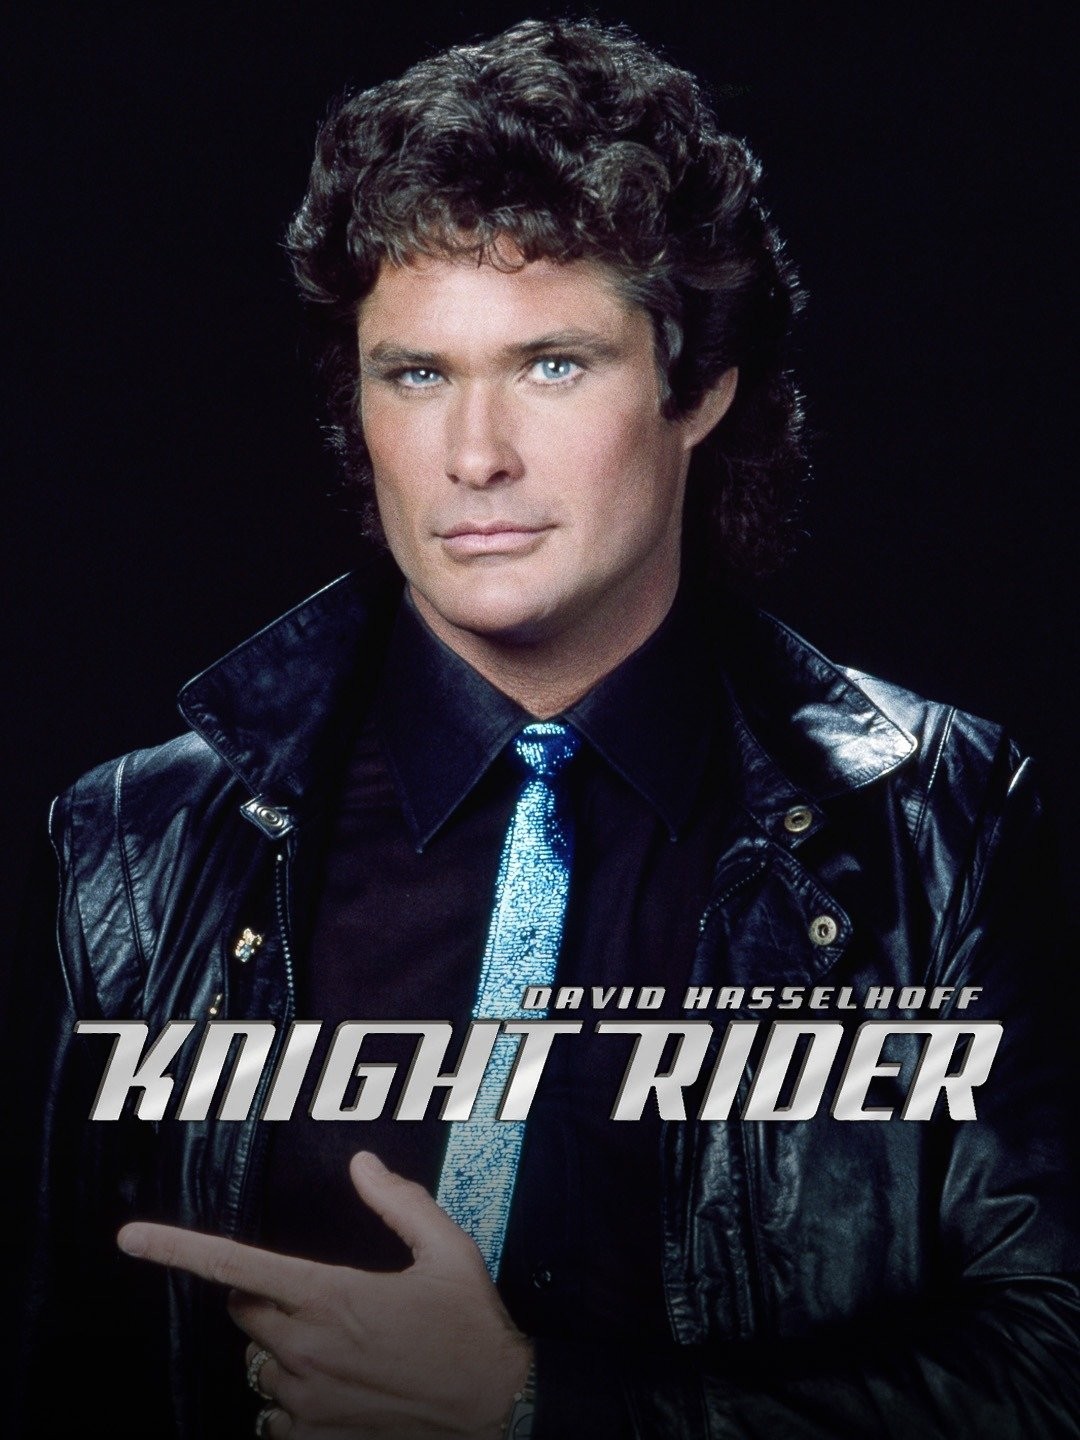 Knight Rider  Rotten Tomatoes